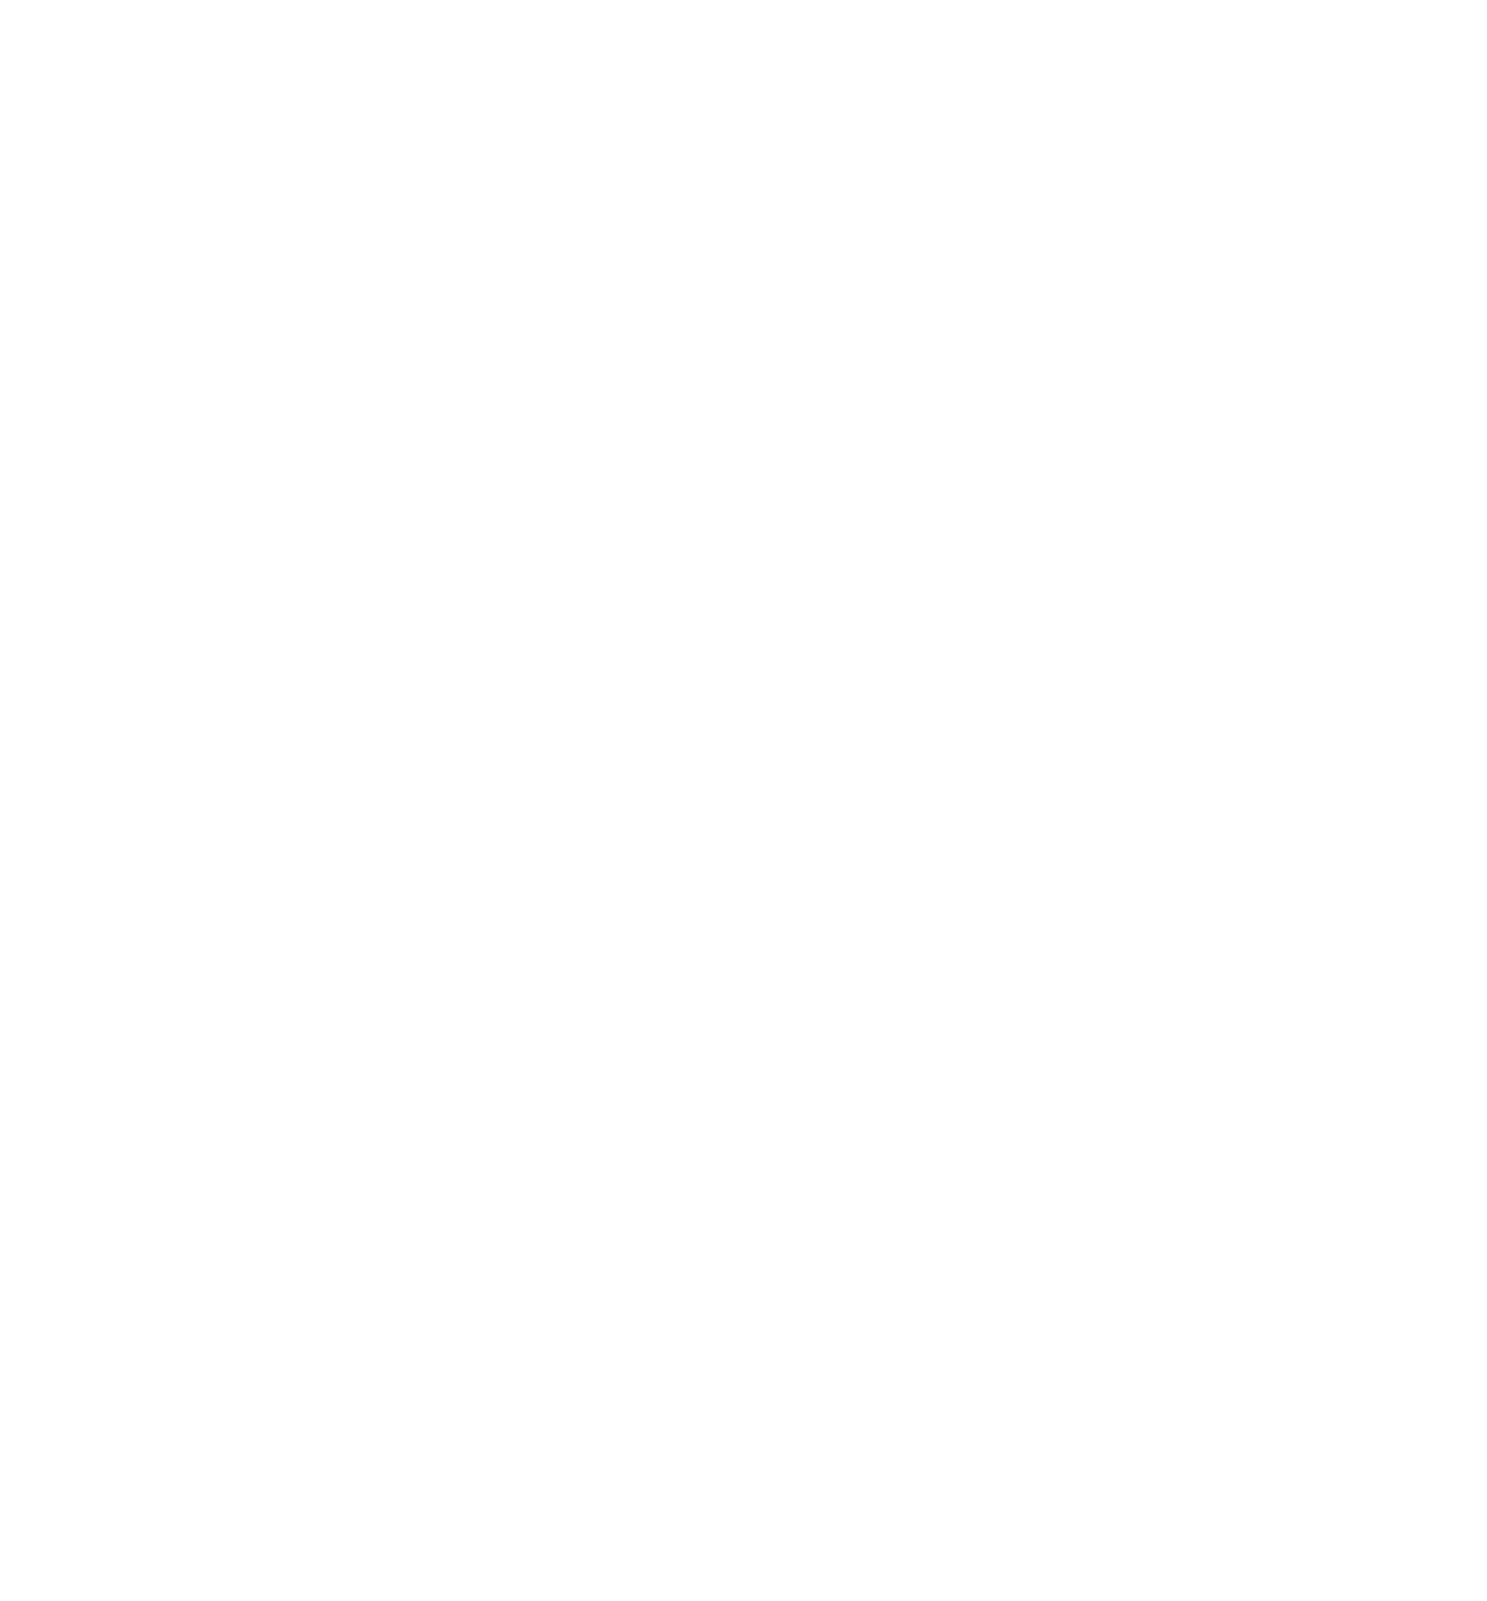 Méliuz logo for dark backgrounds (transparent PNG)